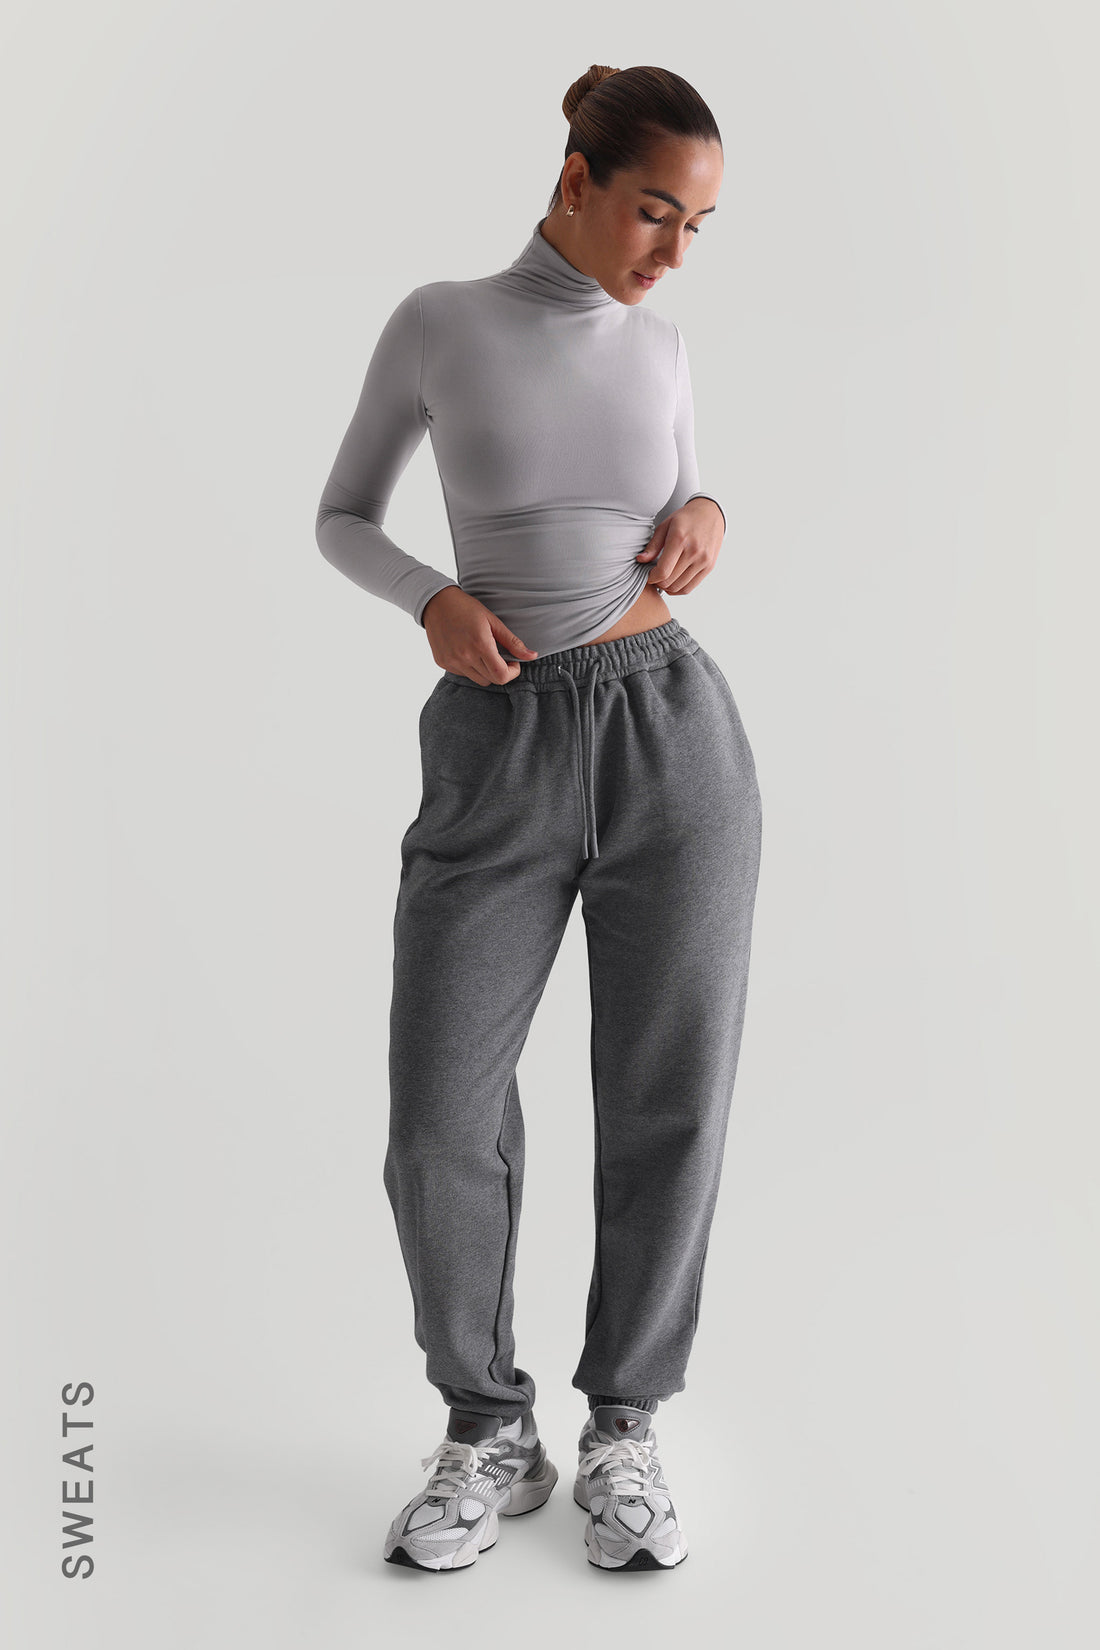 Awdis College Cuffed Sweatpants / Jogging Bottoms (M) (Heather Grey)